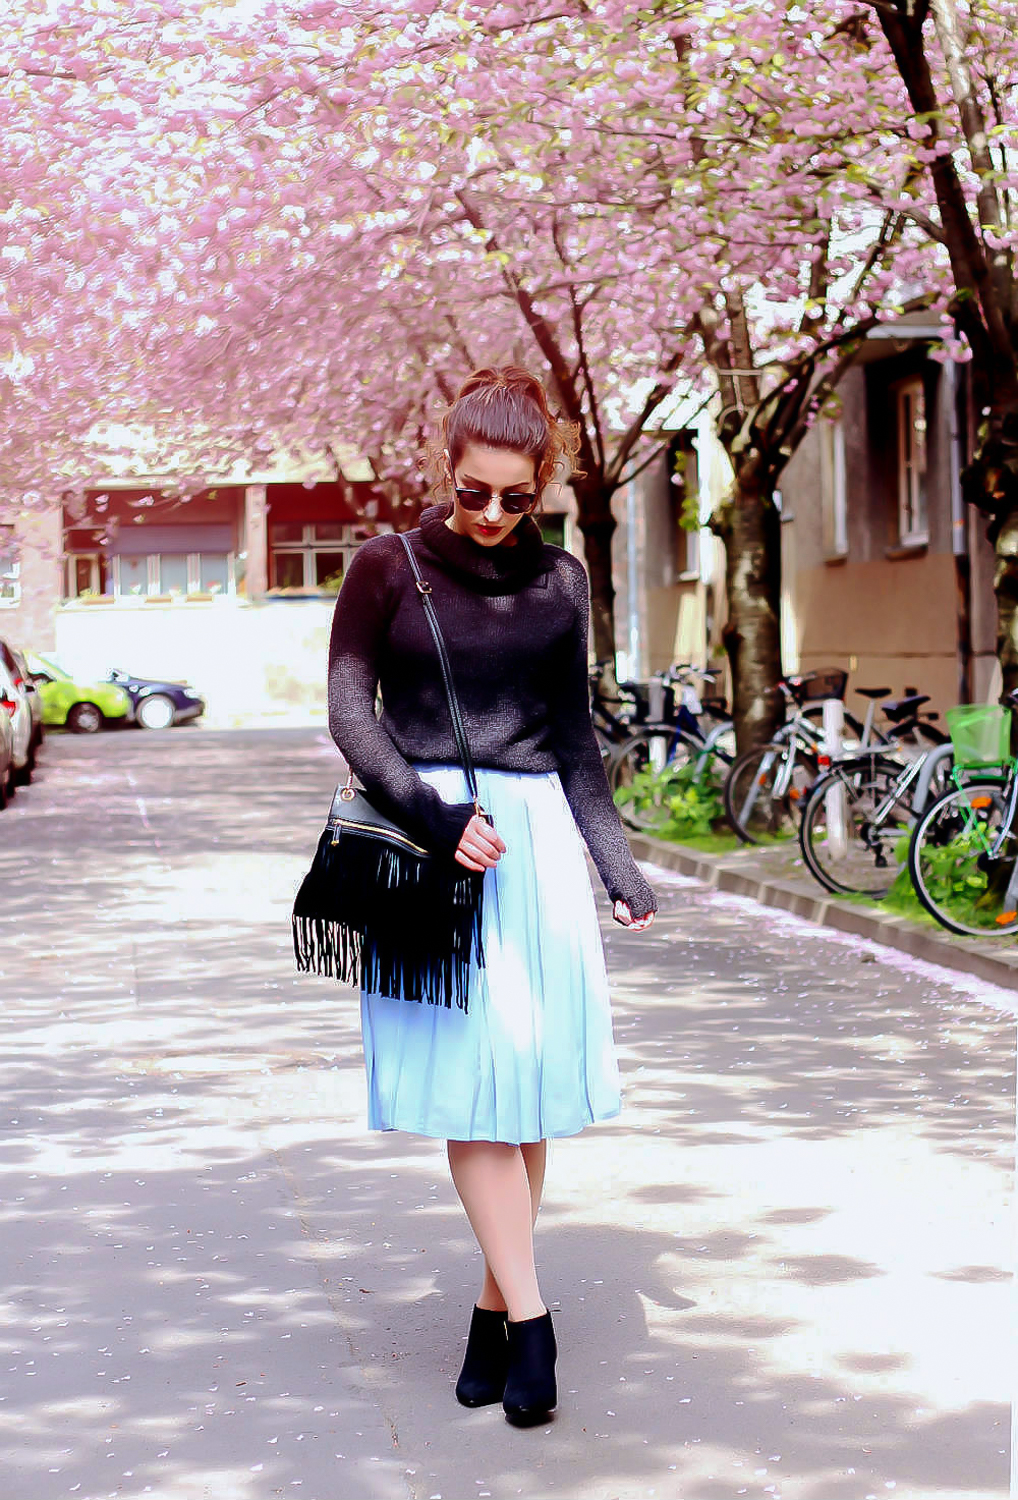 Midi Skirt Asos light blue vintage kitten heel ankle boots outfit streetstyle cherry blossom street berlin spring knitted turtleneck sweater spring looks